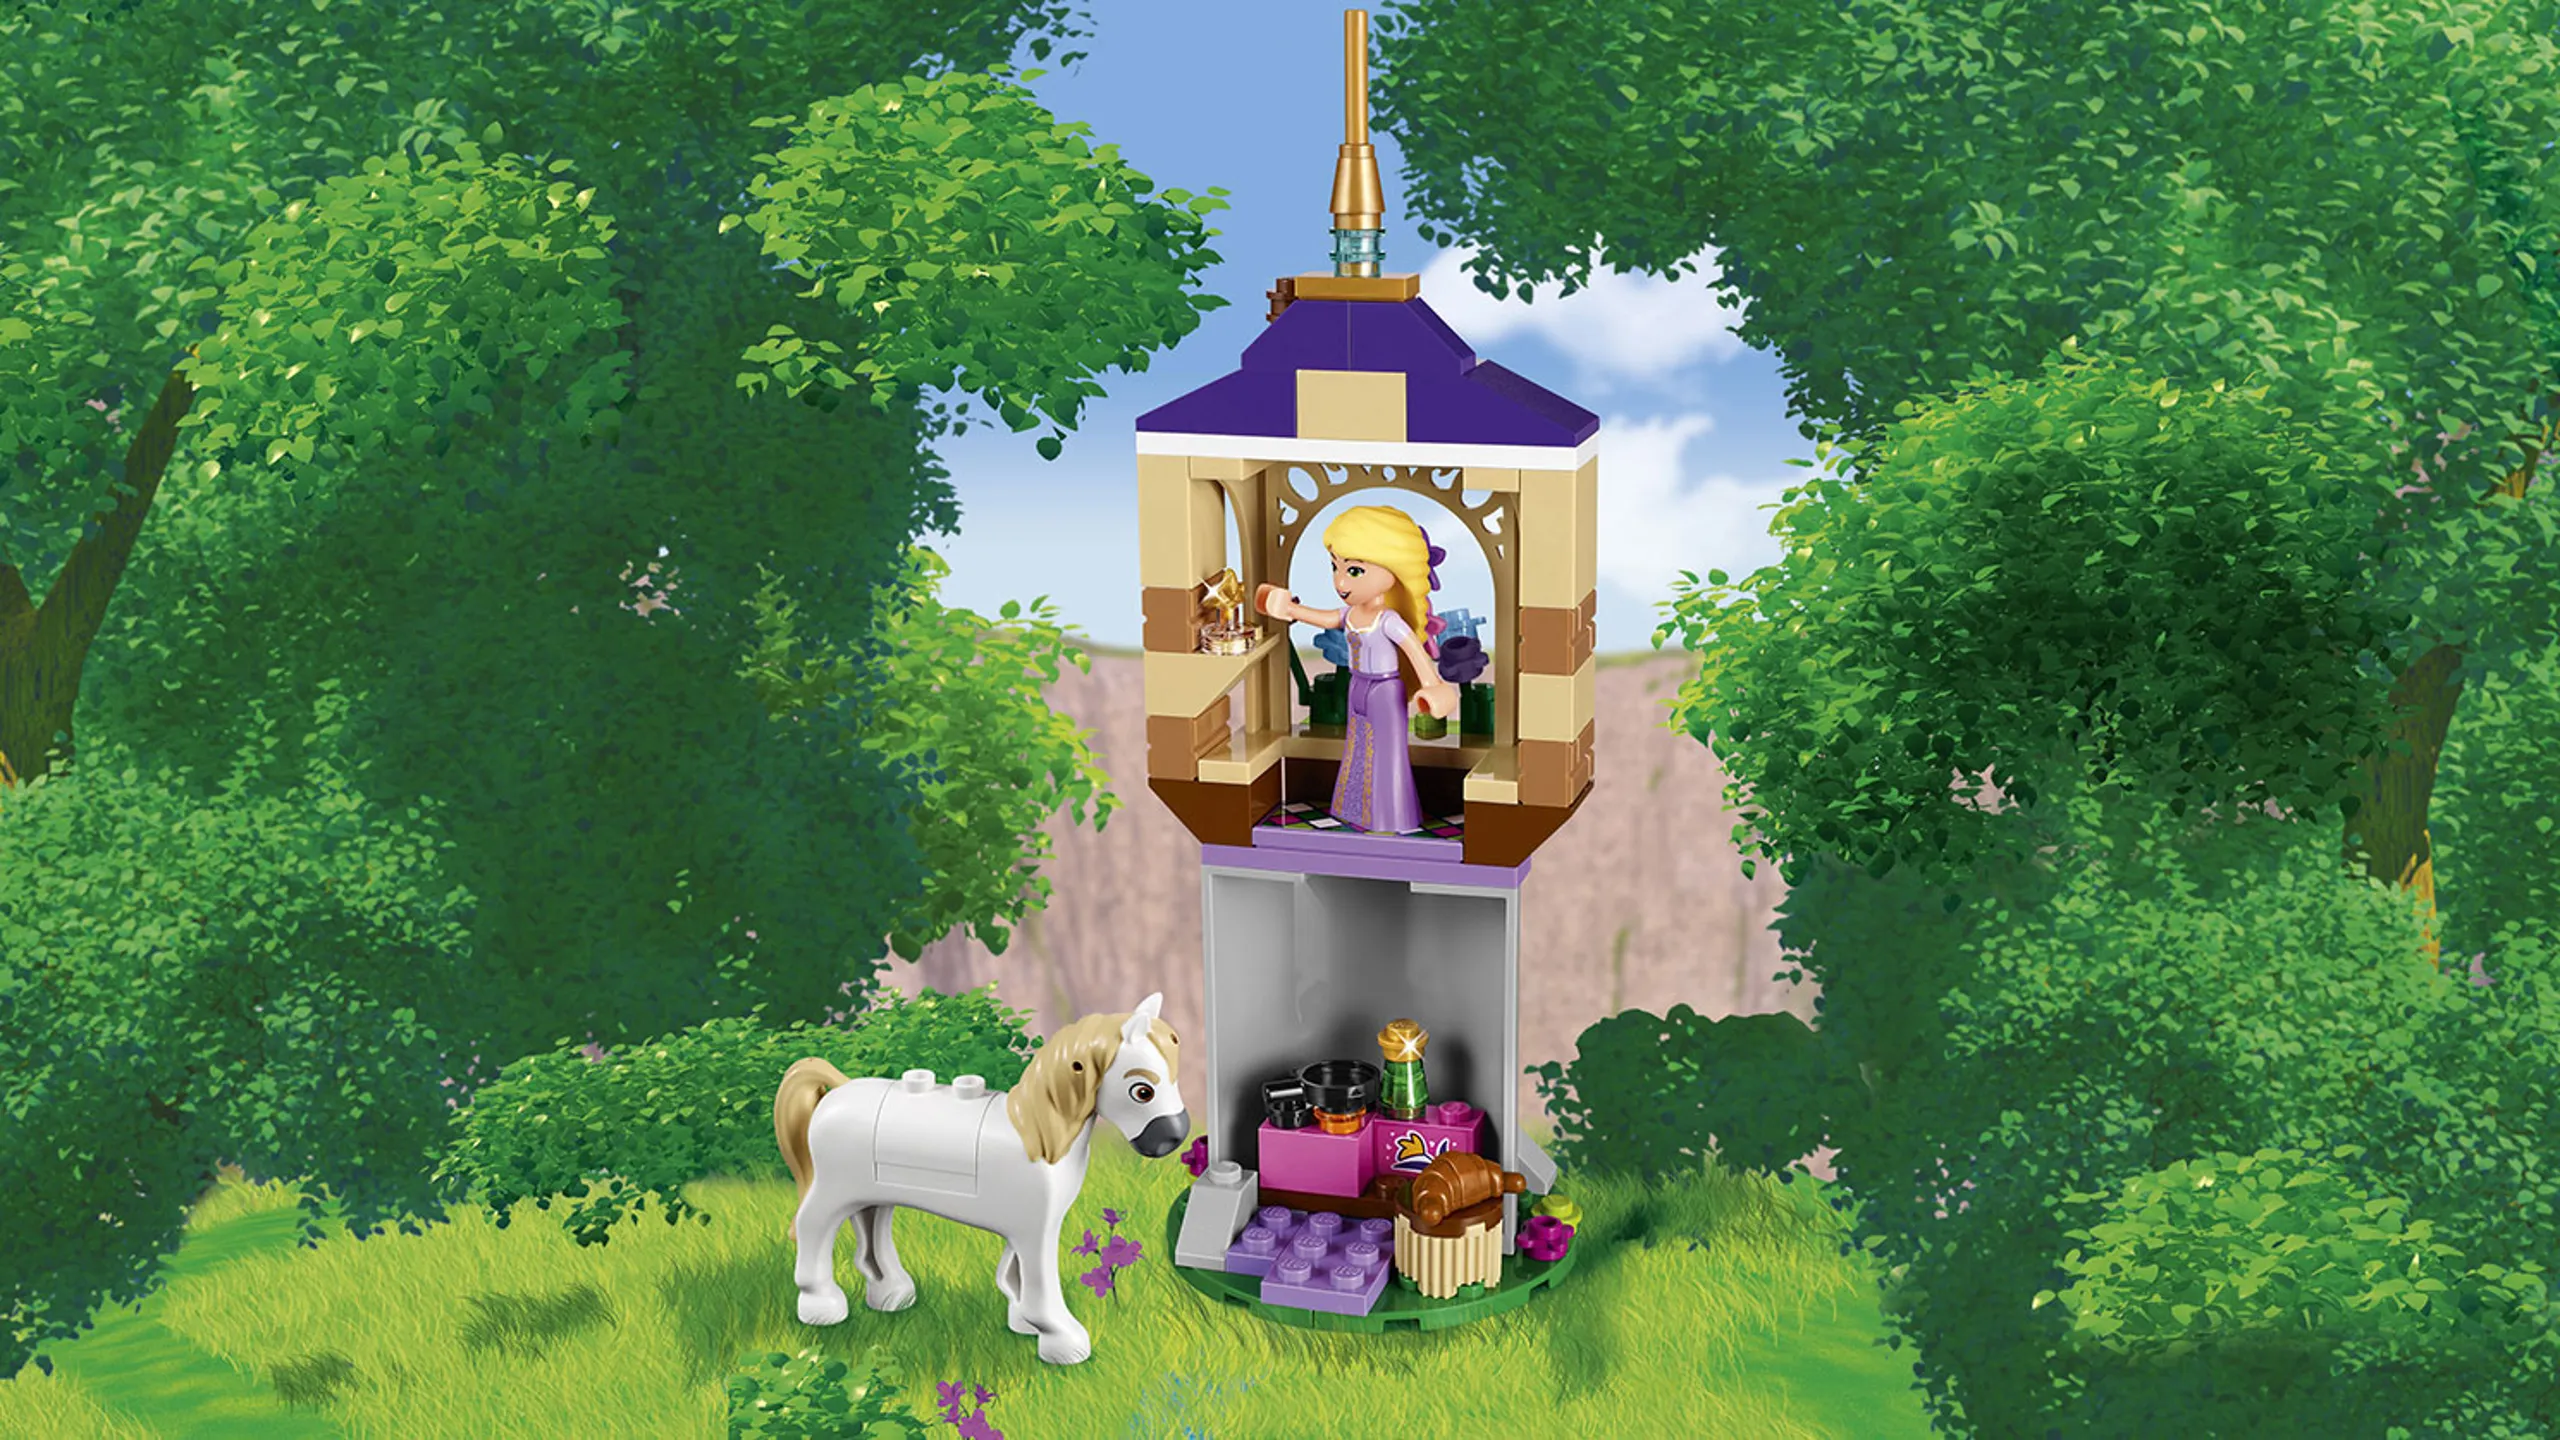 LEGO Disney Princess 41065 Rapunzel's Best Day Ever